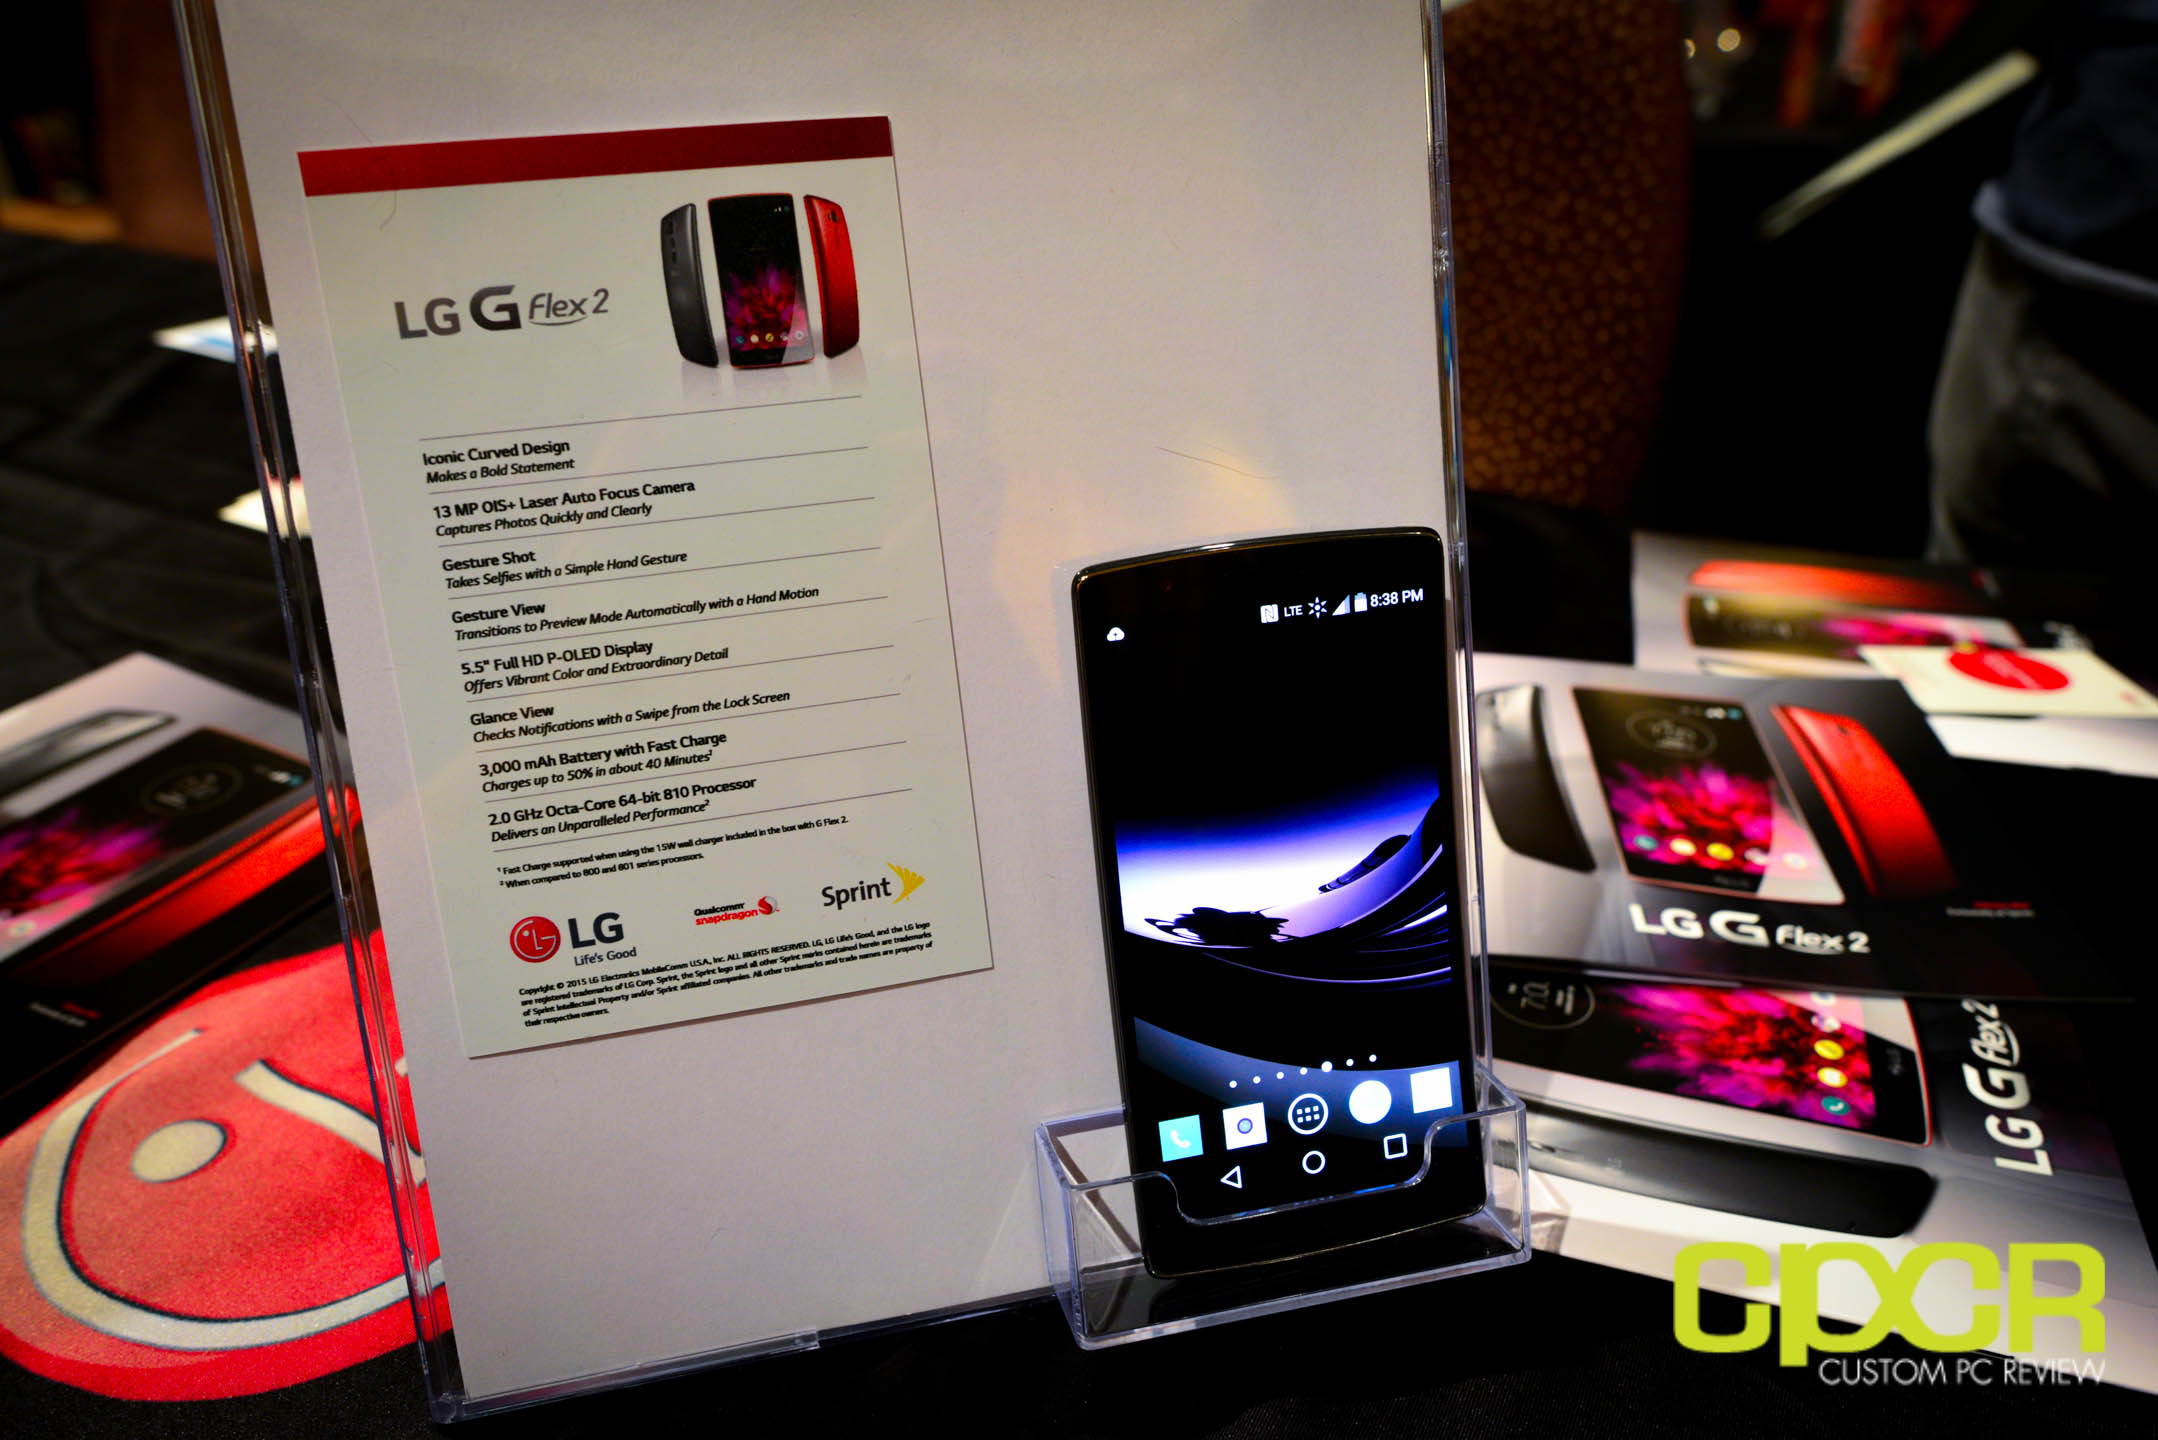 CES 2015: LG Displays G Flex 2 Smartphone